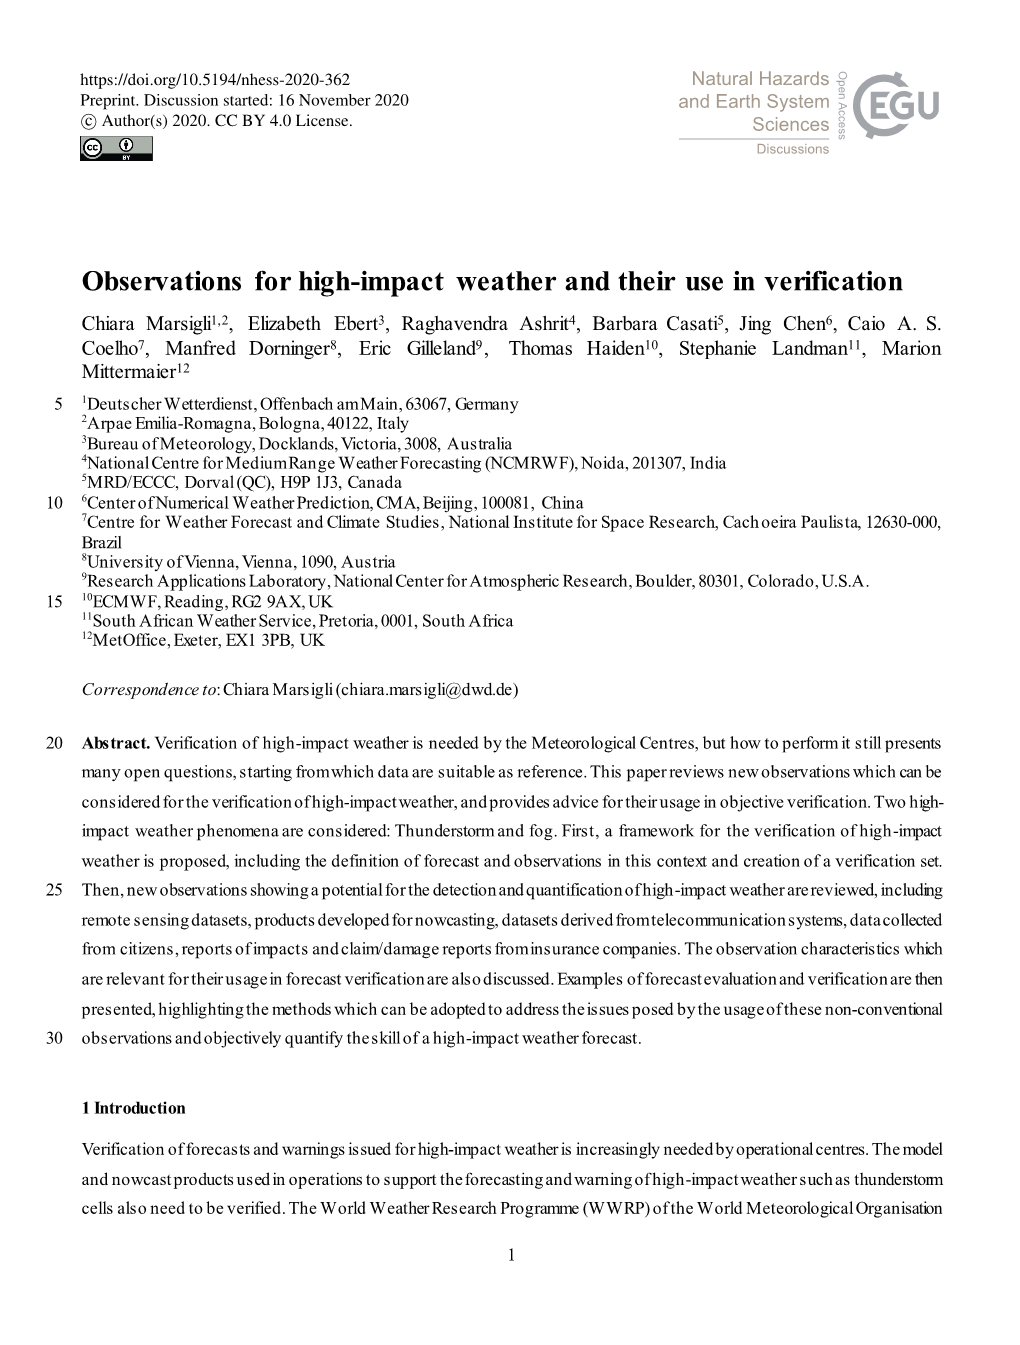 Observations for High-Impact Weather and Their Use in Verification Chiara Marsigli1,2, Elizabeth Ebert3, Raghavendra Ashrit4, Barbara Casati5, Jing Chen6, Caio A